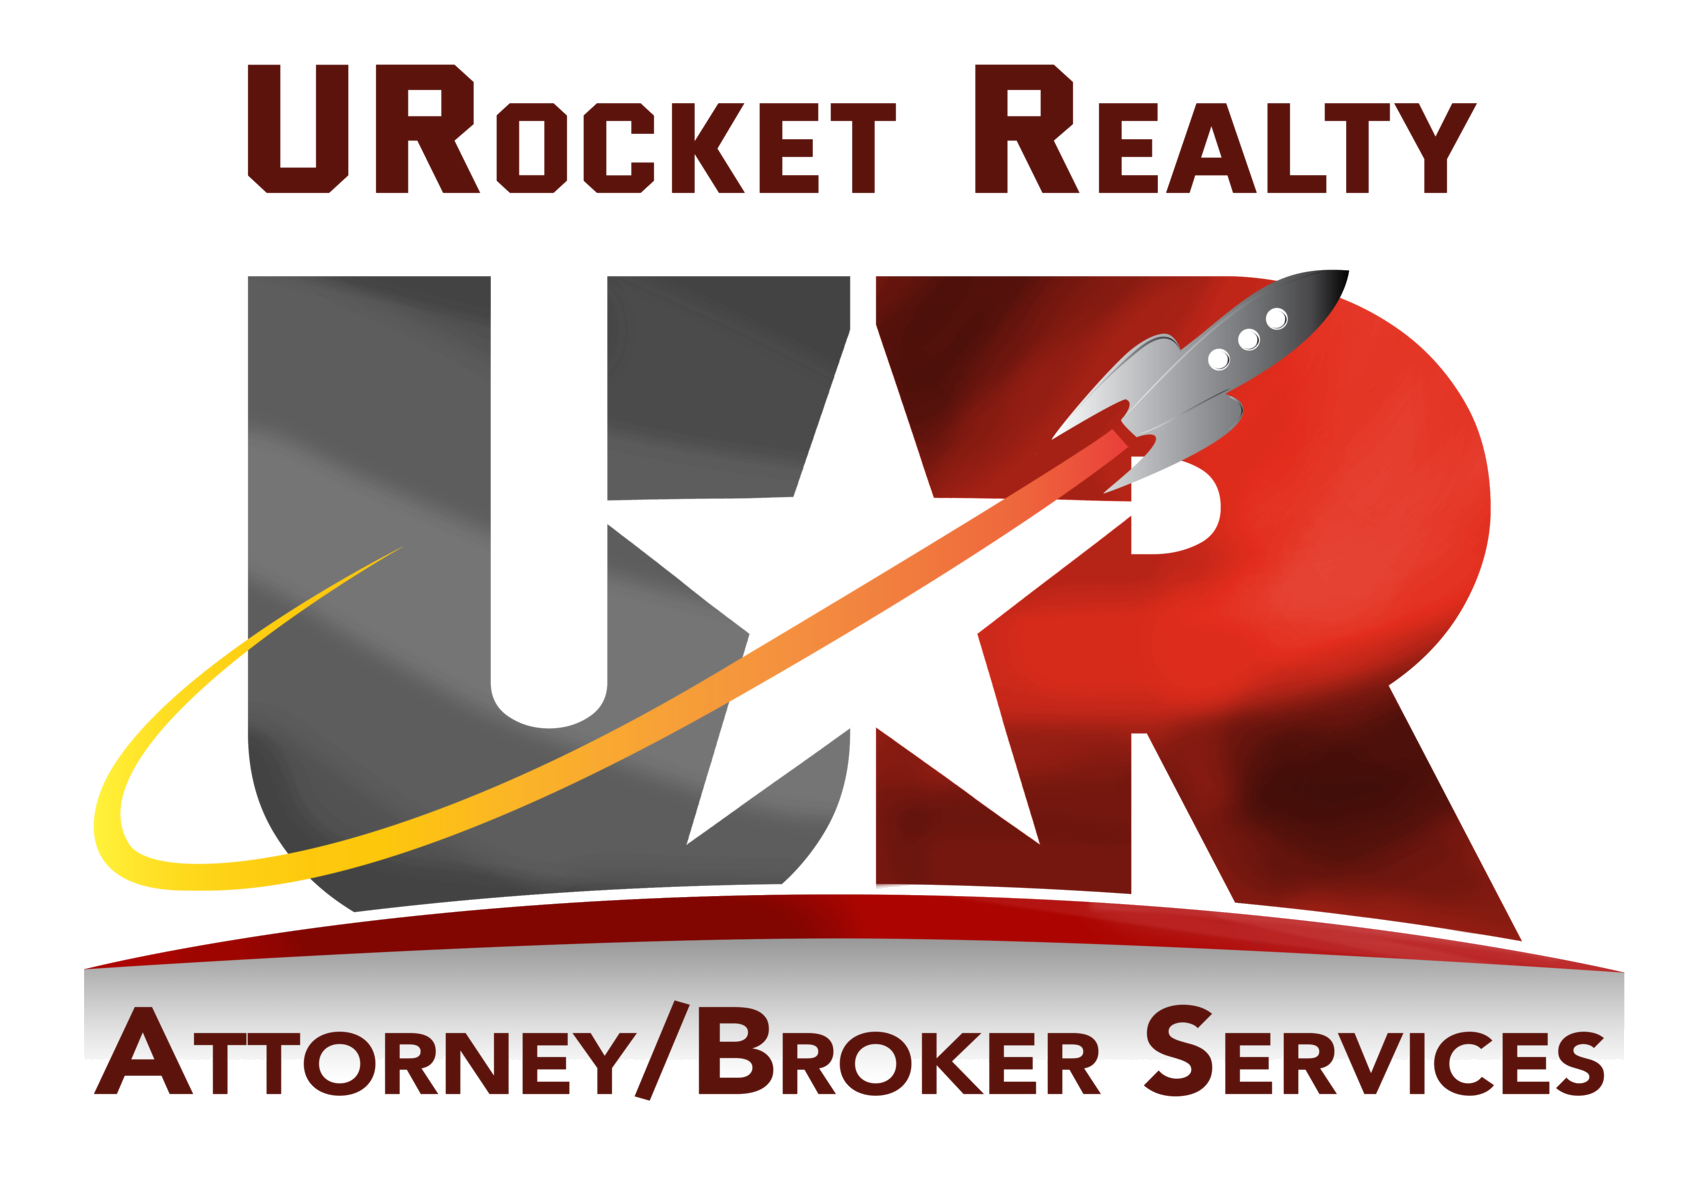 Attorney Broker Services / URocket Realty  